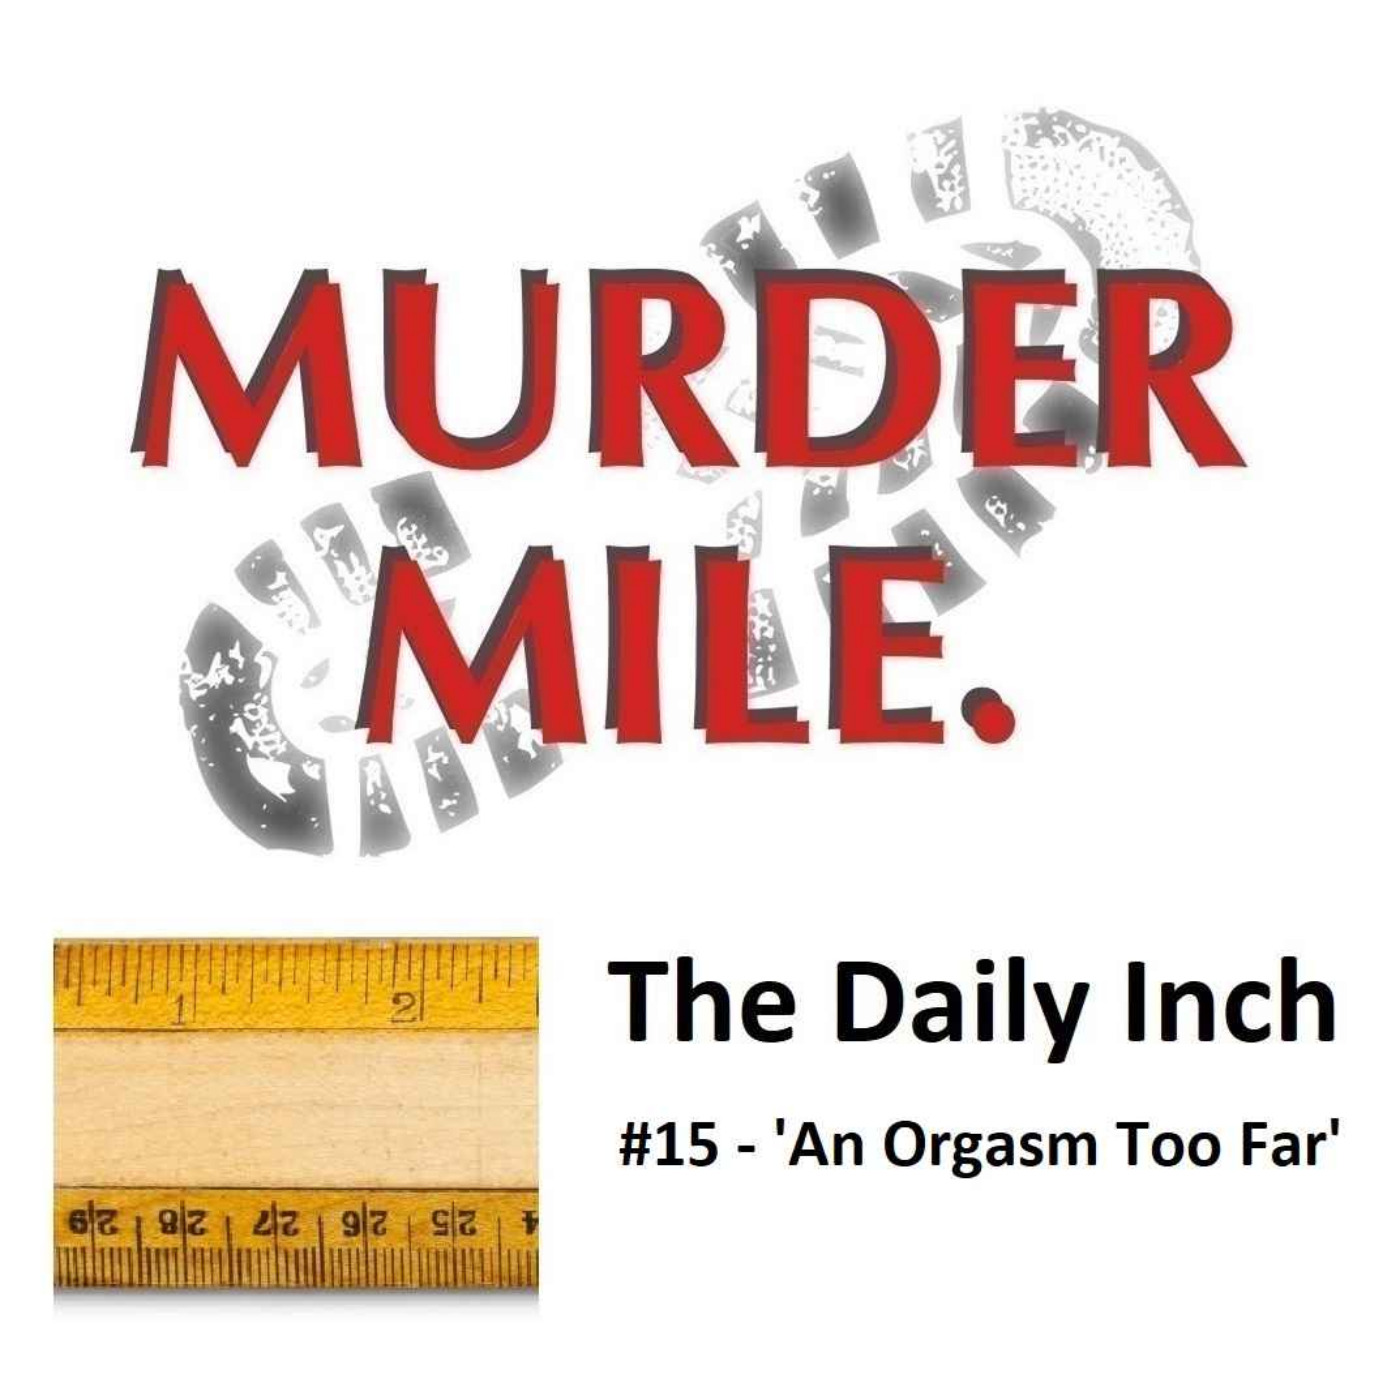 The Daily Inch #15 - ’An Orgasm Too Far’